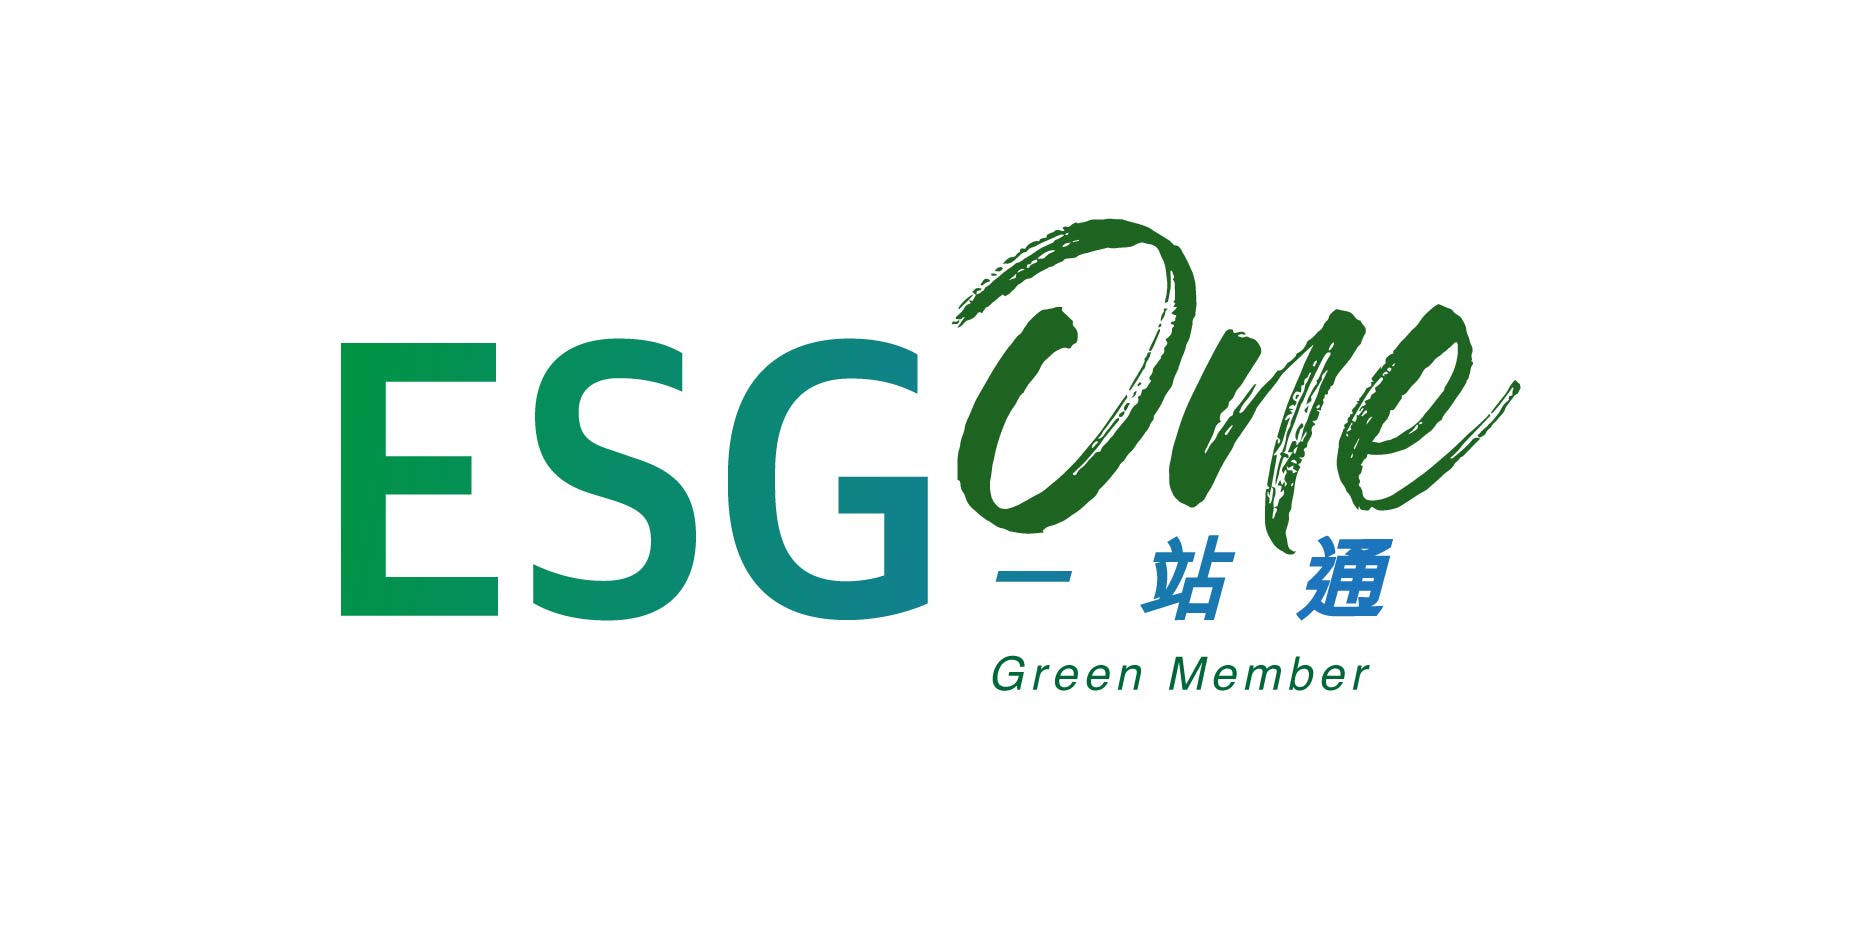 Green Member of the HKPC's ESG One community